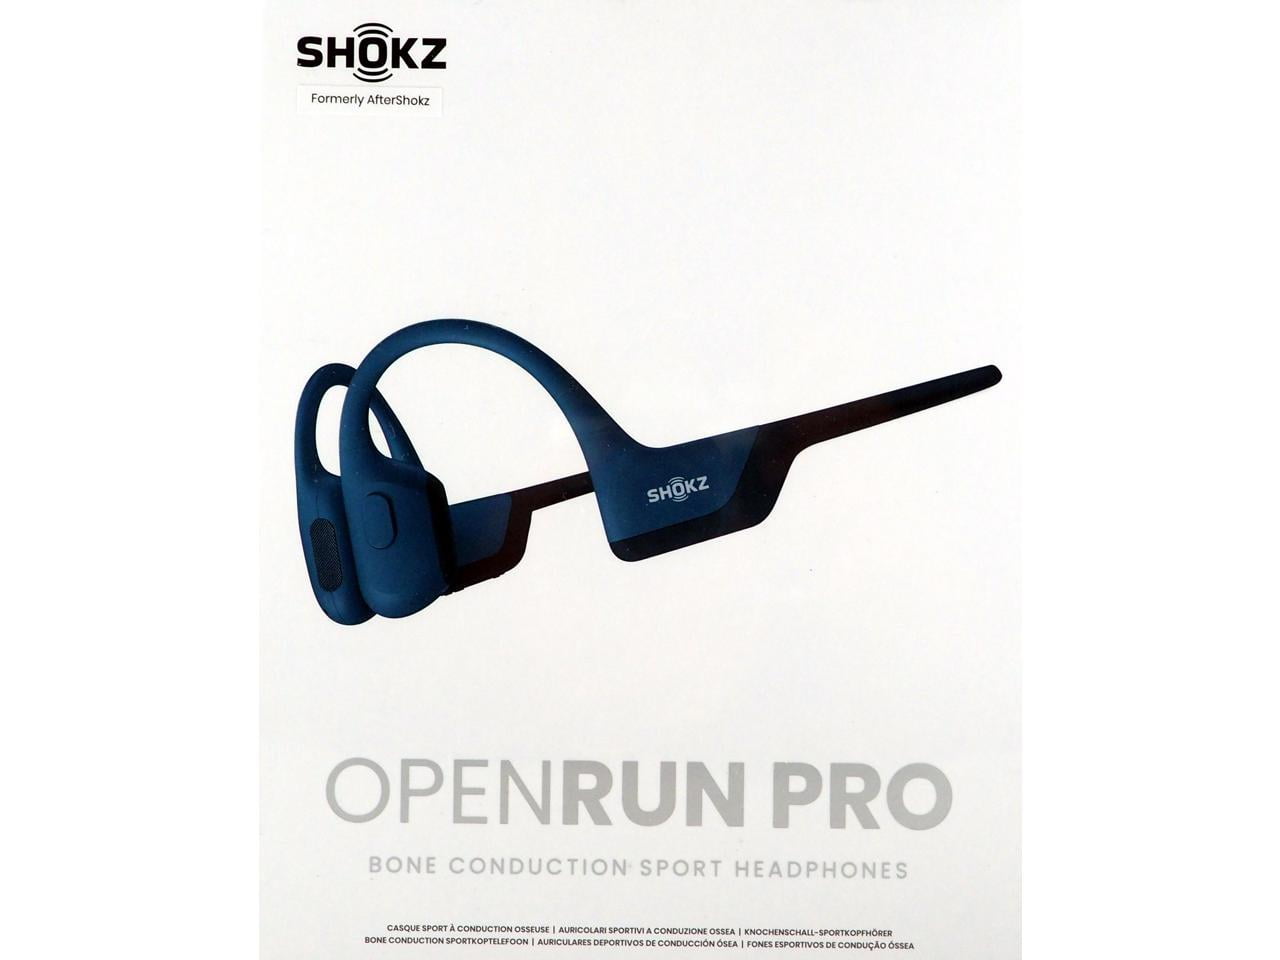 OpenRun Pro Bone Conduction Sport Headphone - Shokz